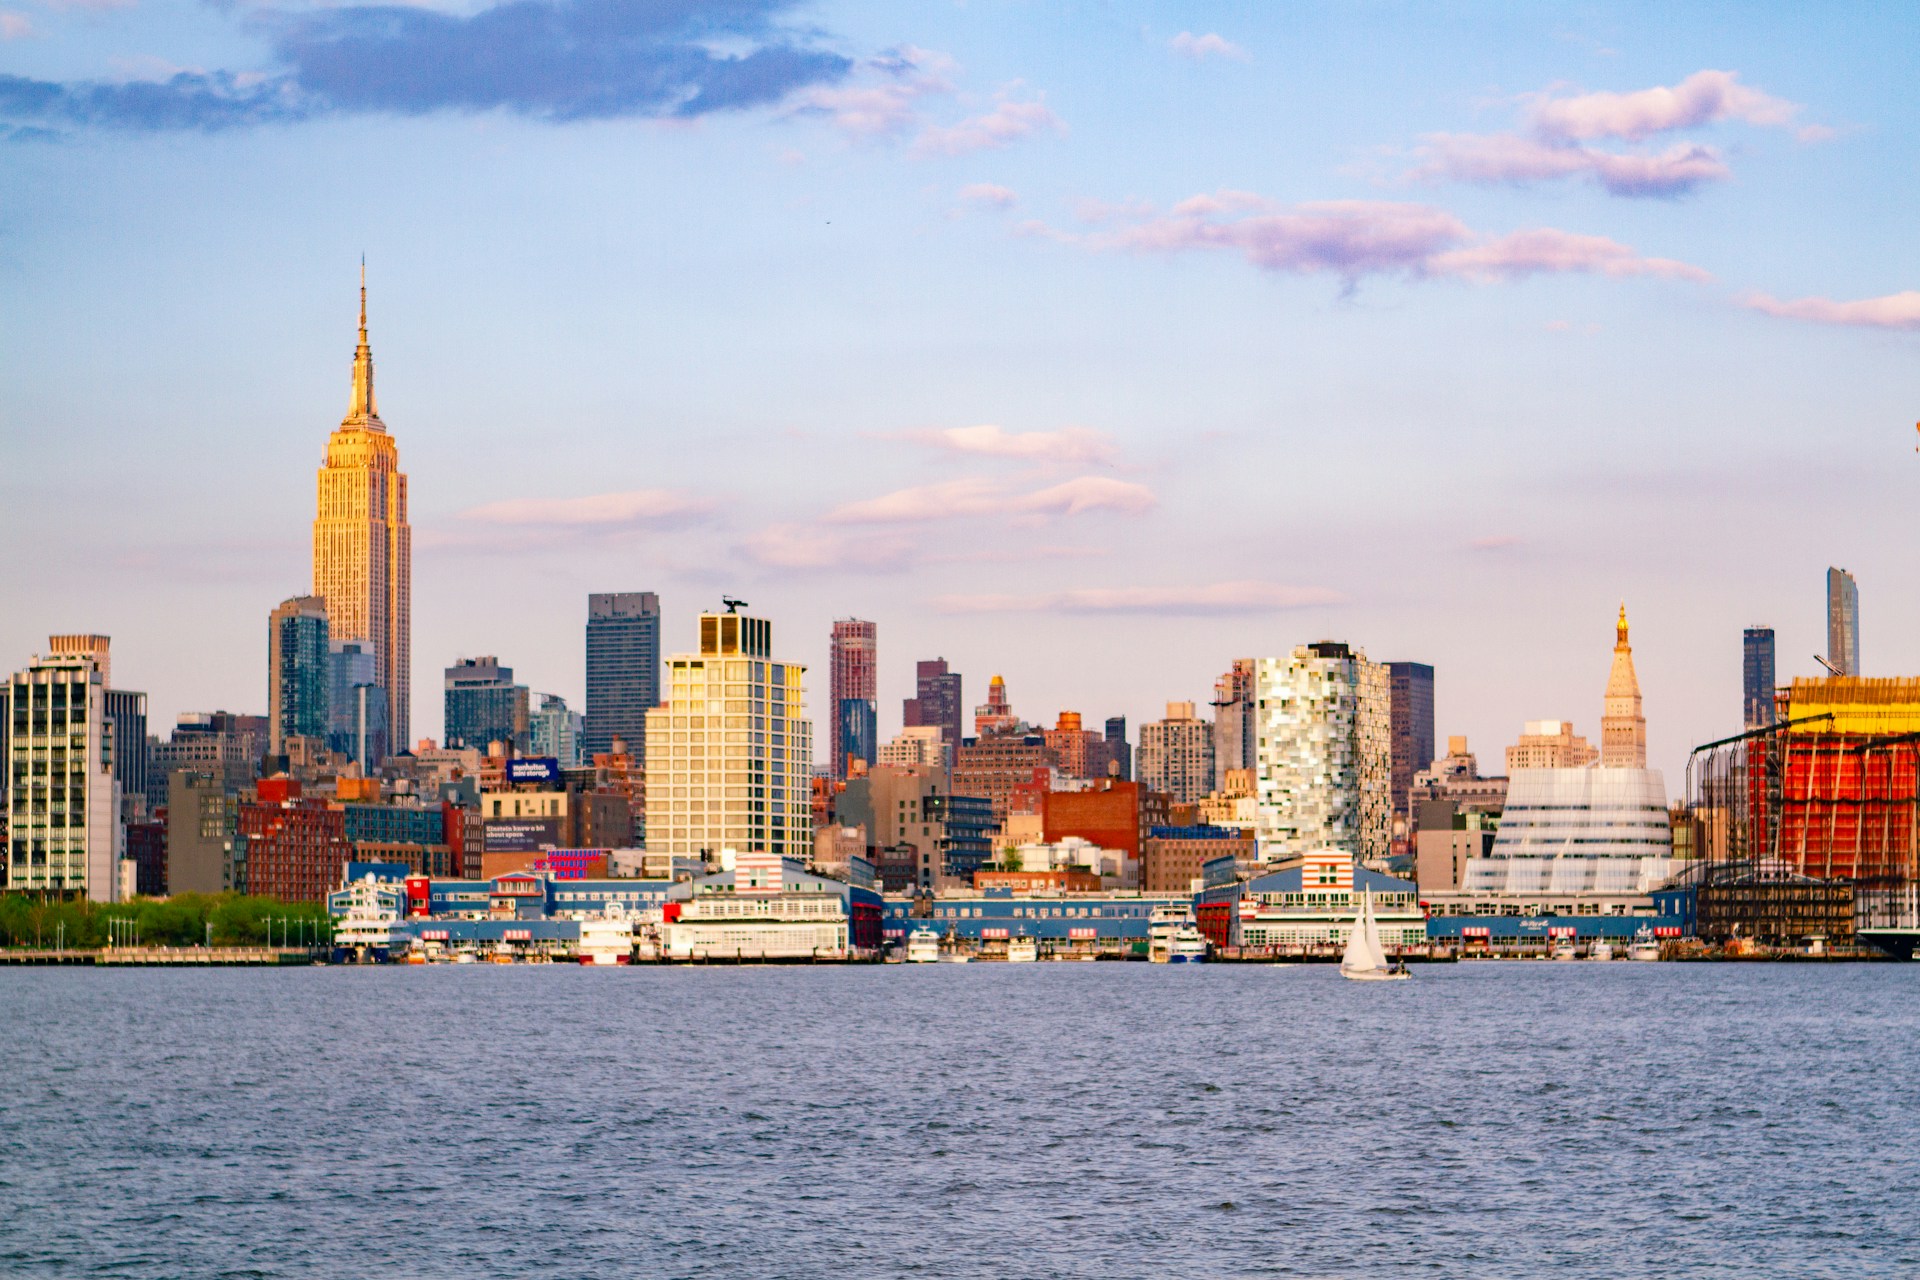 City skyline of New Jersey, as seen from a Boardwalk